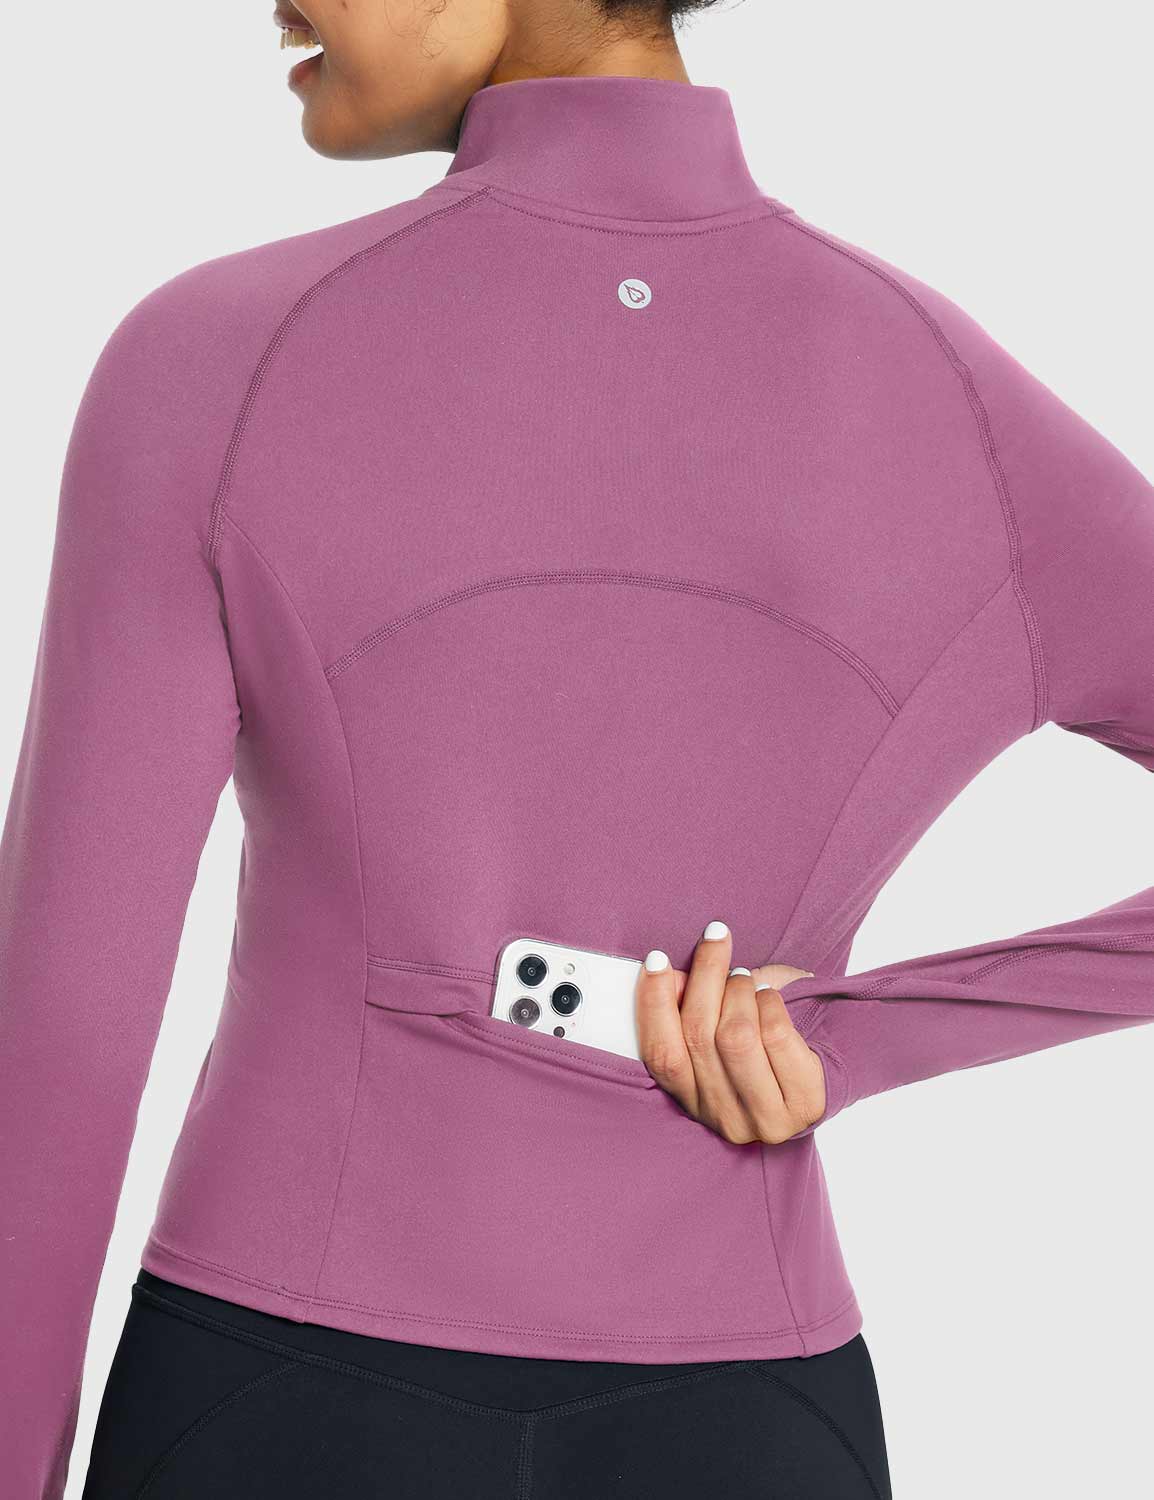 Baleaf Women's Half Zip Pullover Stand Collar Sweatshirt Hawthorn Rose with Reverse Back Pocket